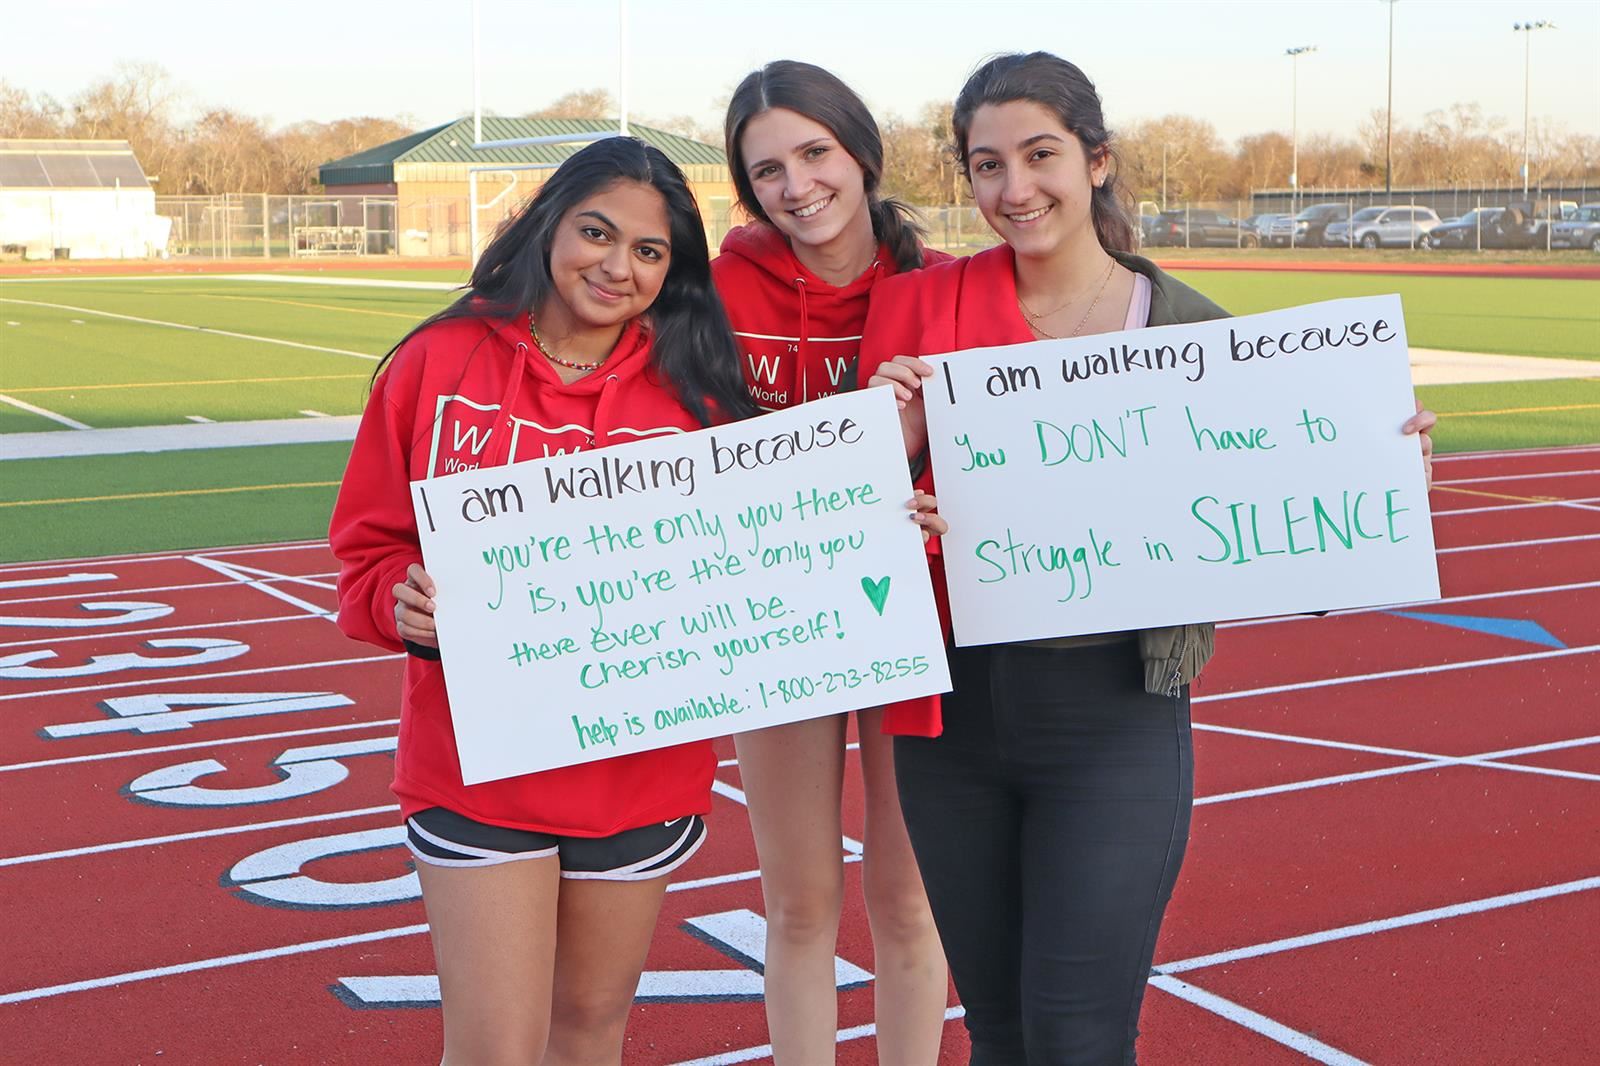  Cypress Woods High School held its first ever “Walk for a Tomorrow” mental health walk on Feb. 28.